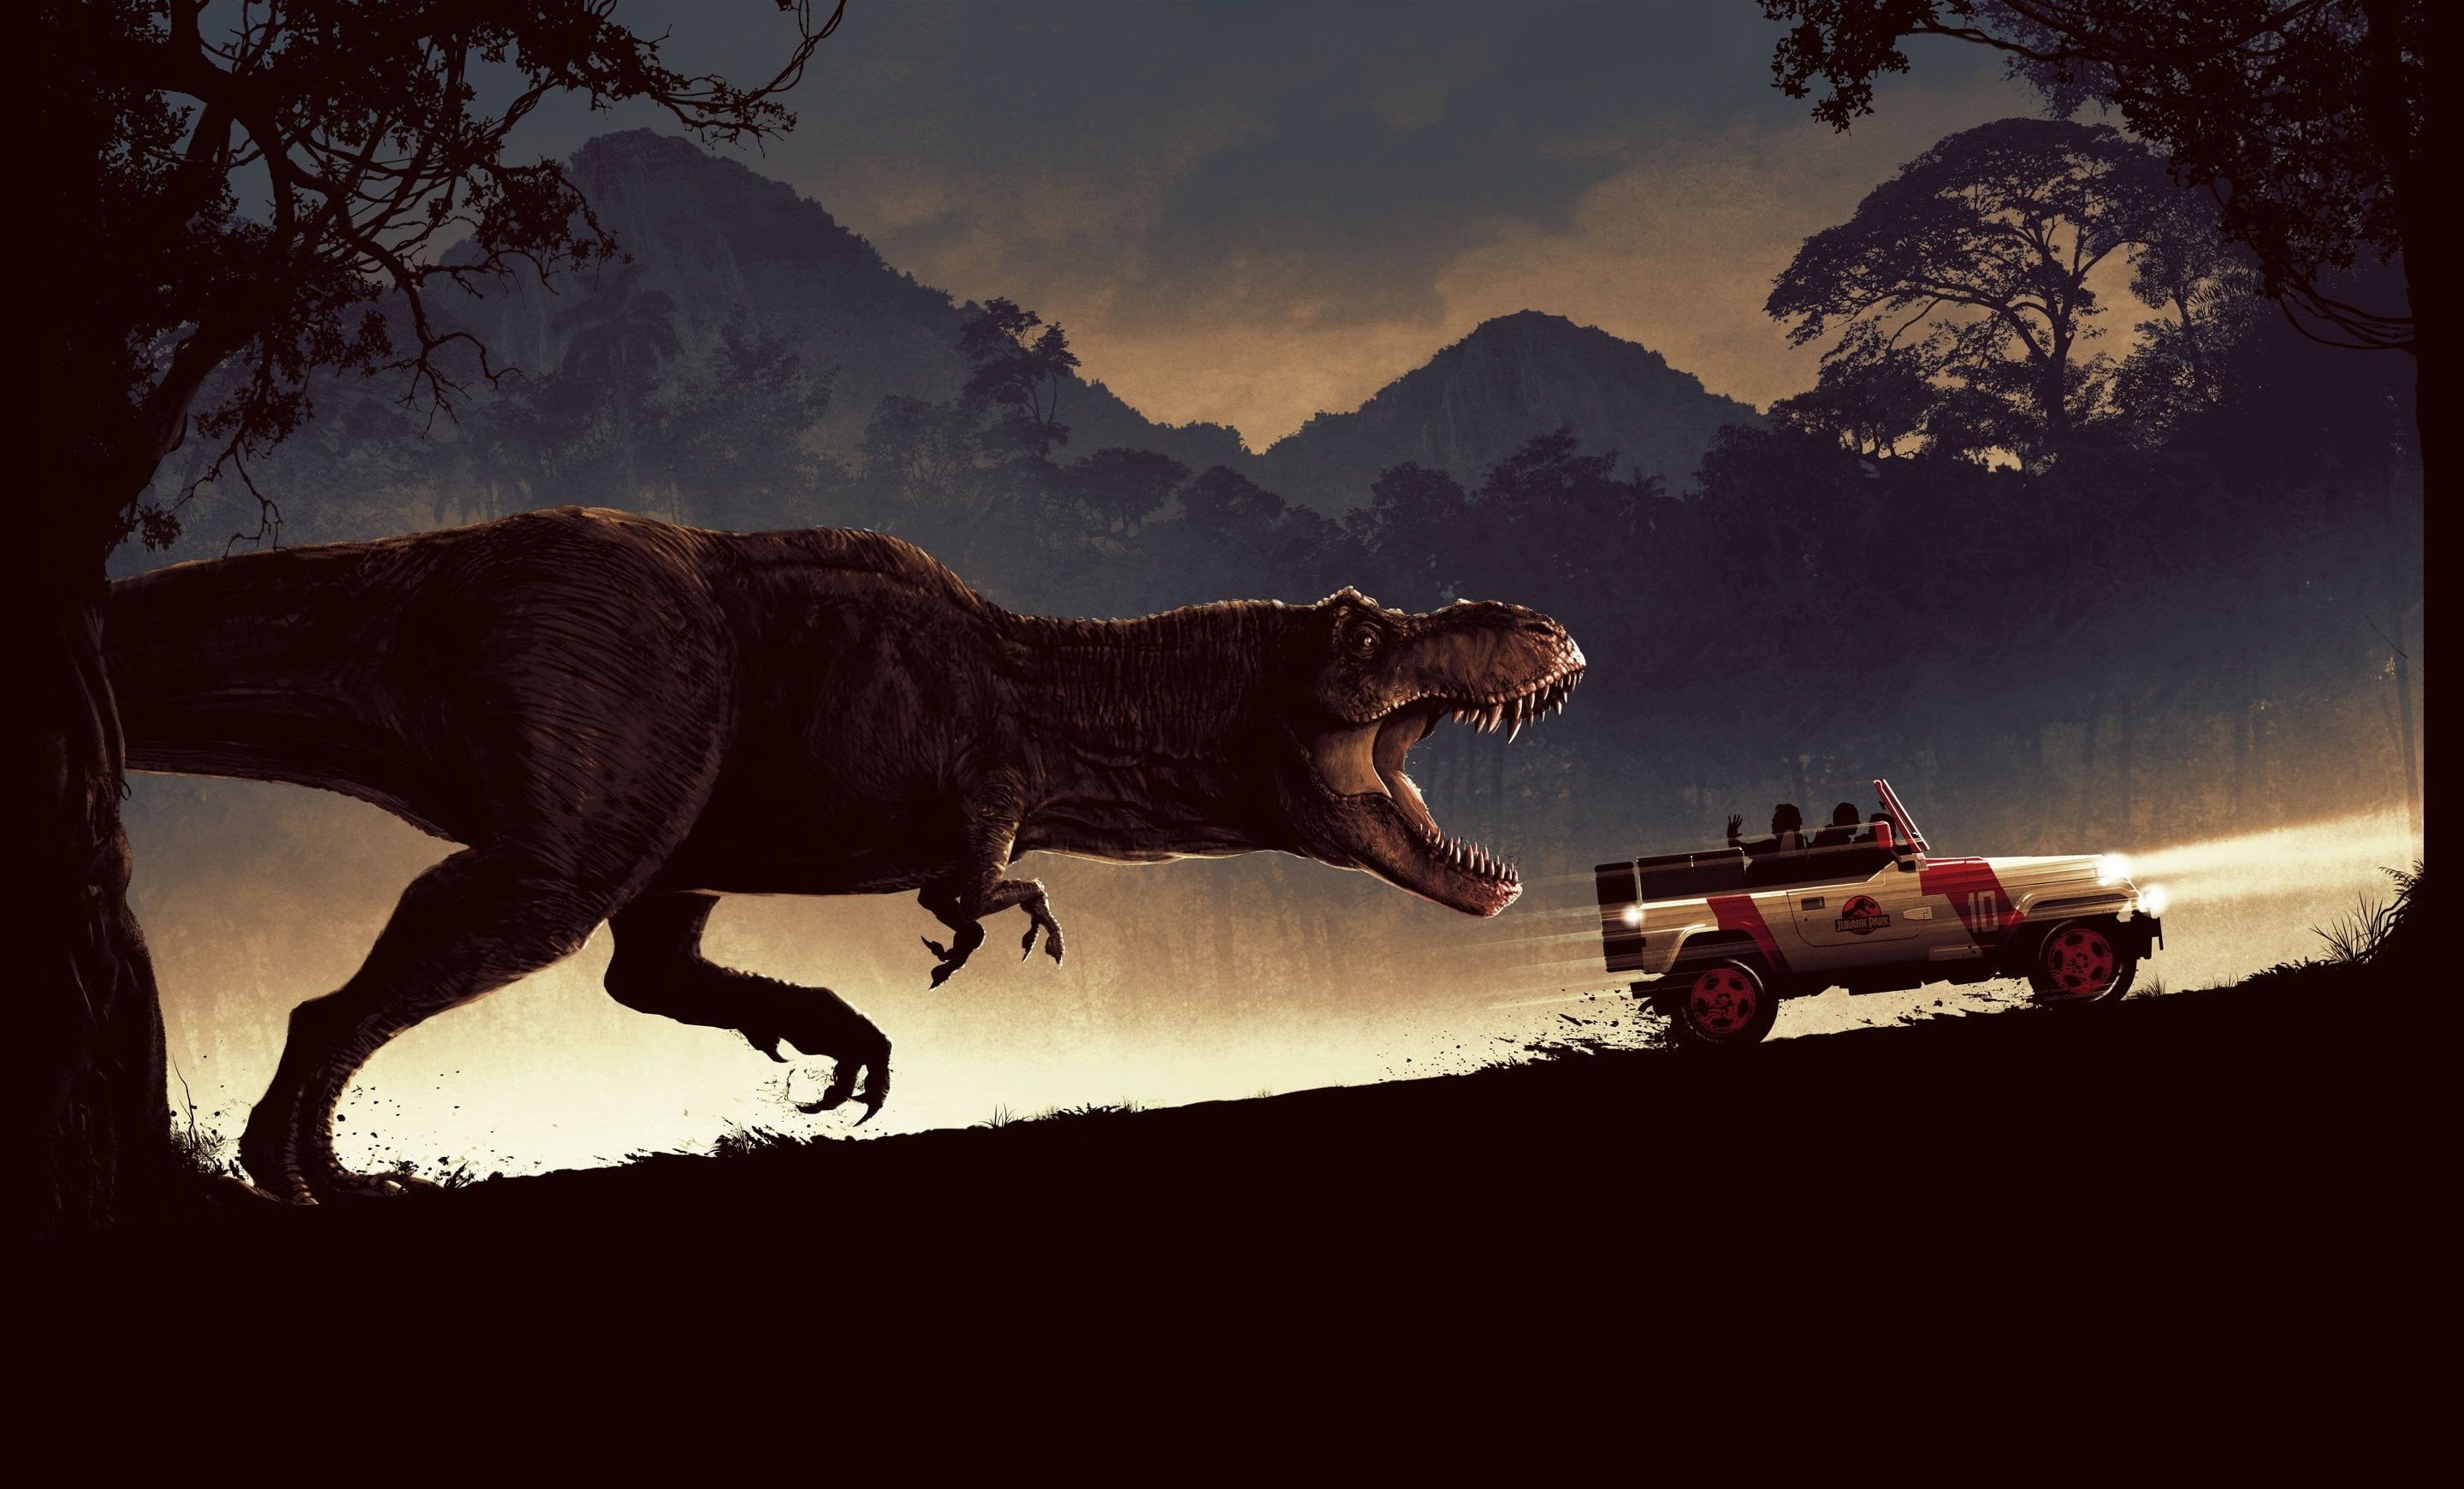 Jurassic Park car, Tyrannosaurus Rex wallpaper, Movie nostalgia, Adventure theme, 2880x1740 HD Desktop